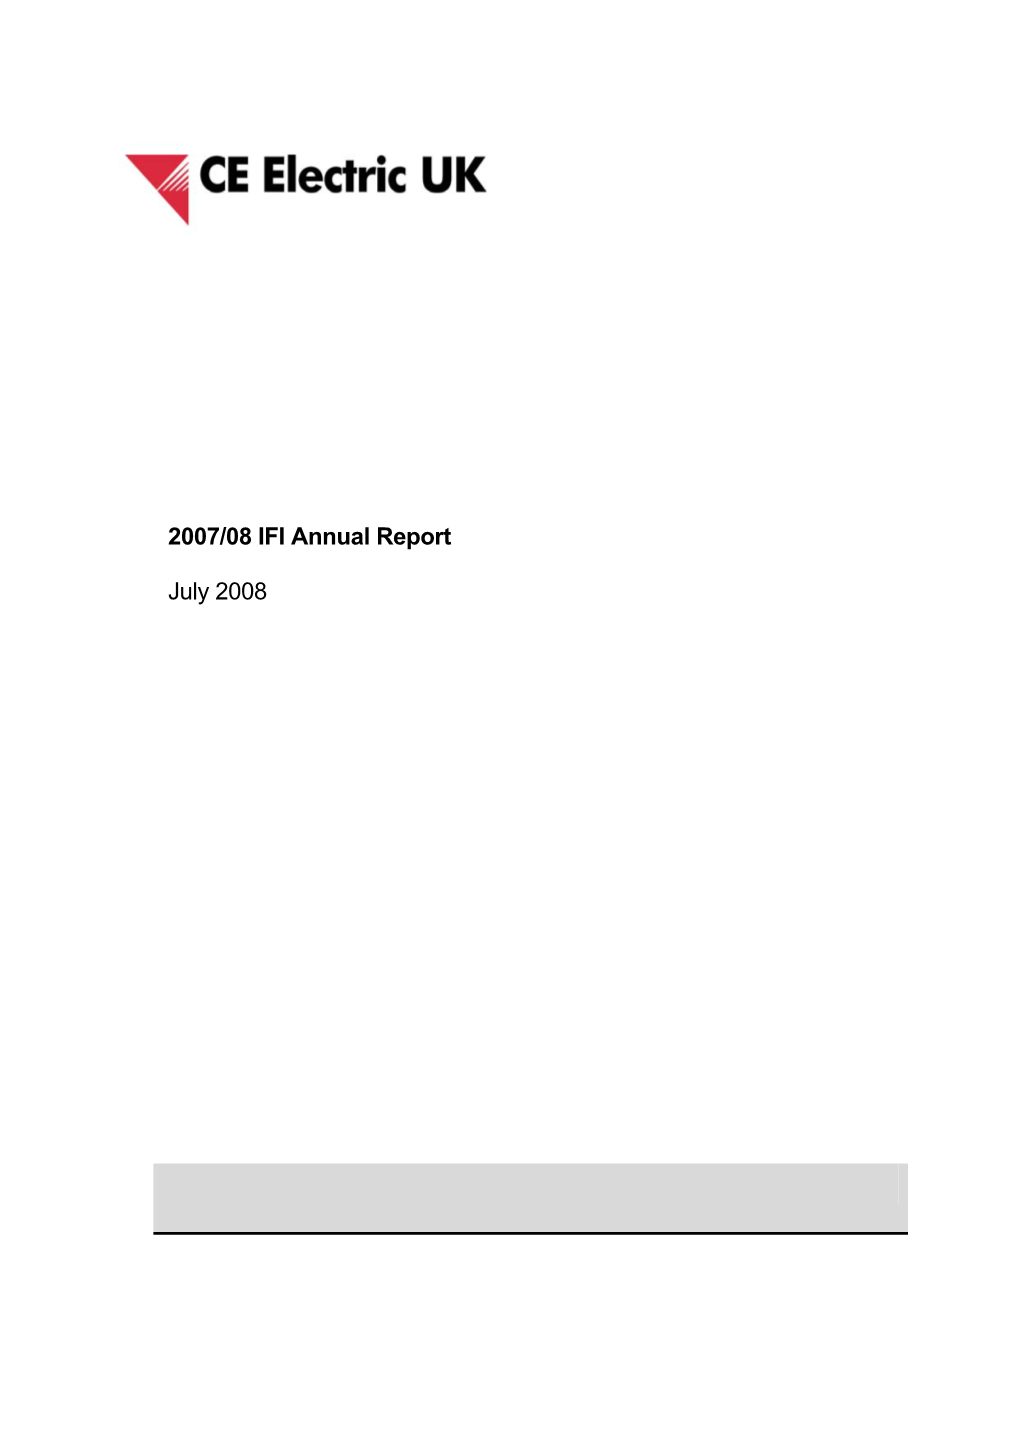 CE Electric IFI Report 2007-08